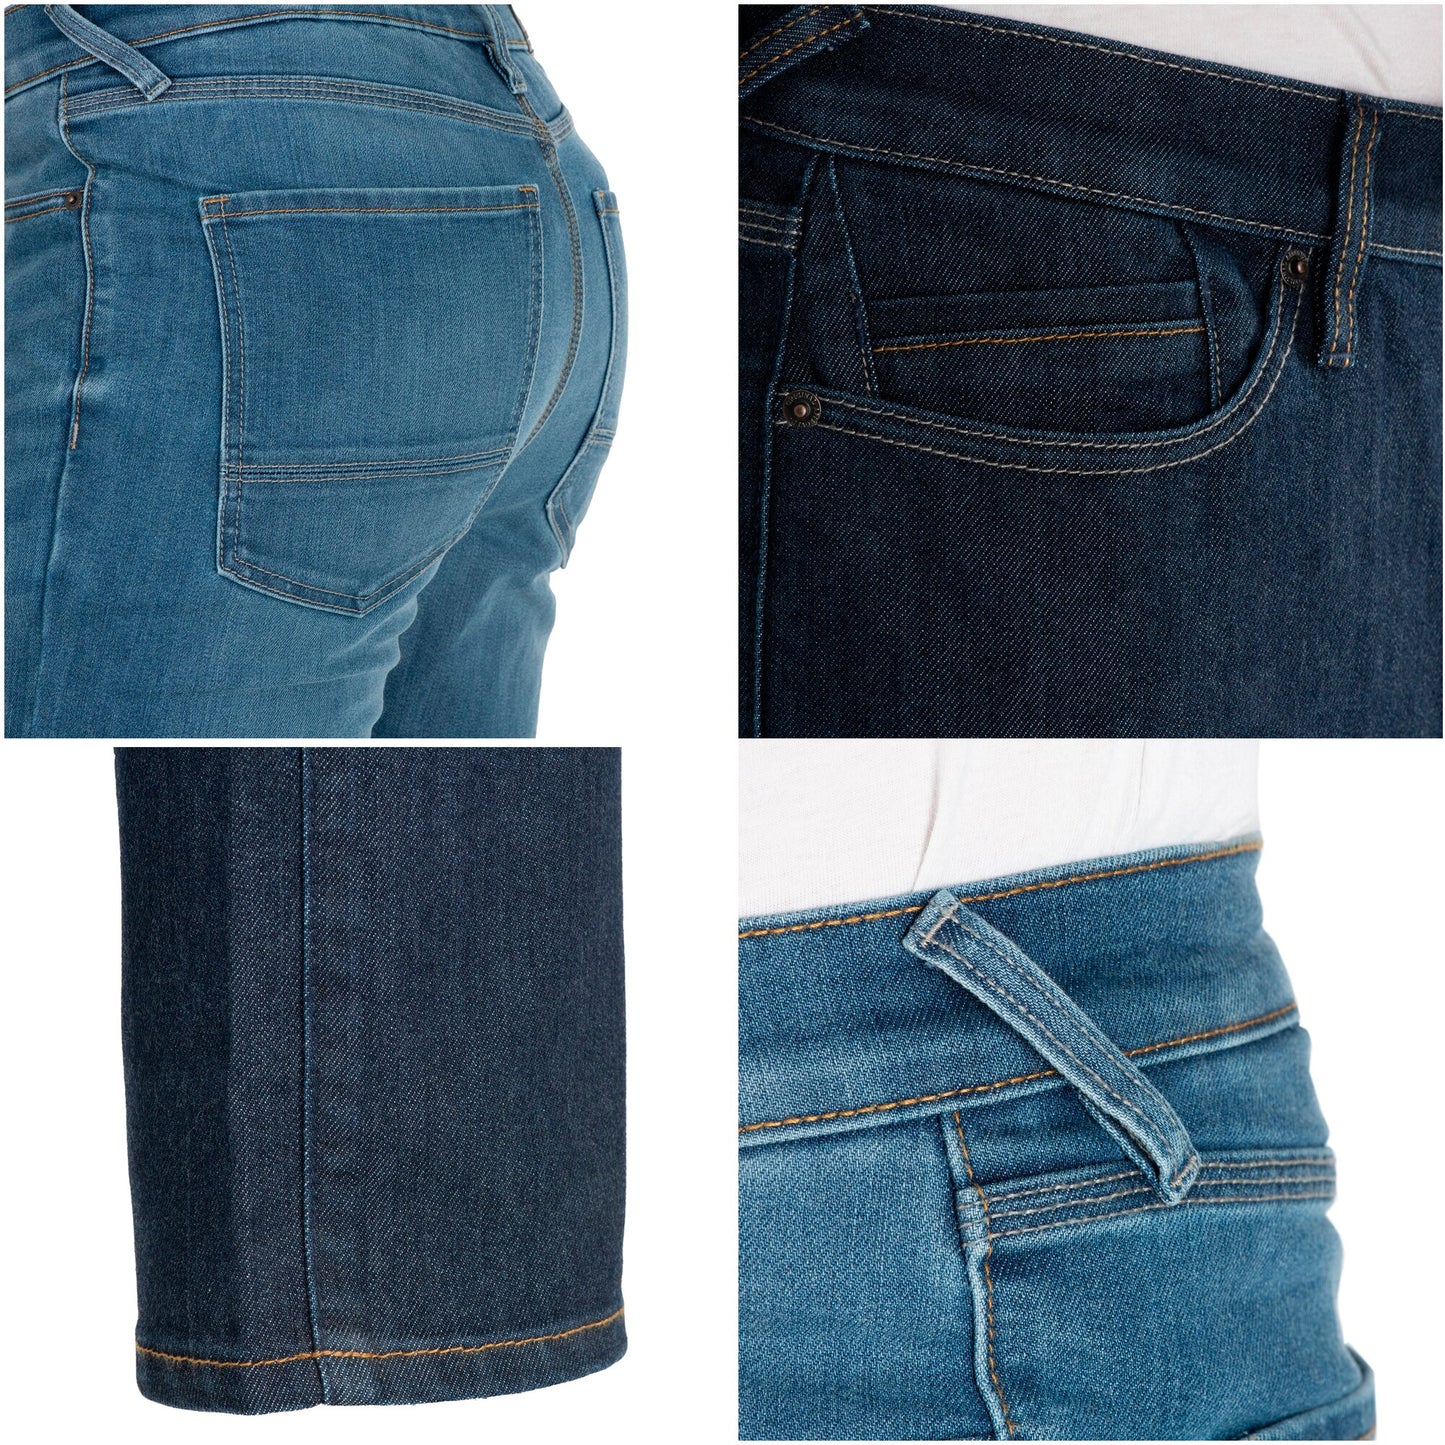 Oxford DM22910-denim jeans biker male/male slim cut indigo blue or worn size 30 to 40 motorcycle (waist measurements)